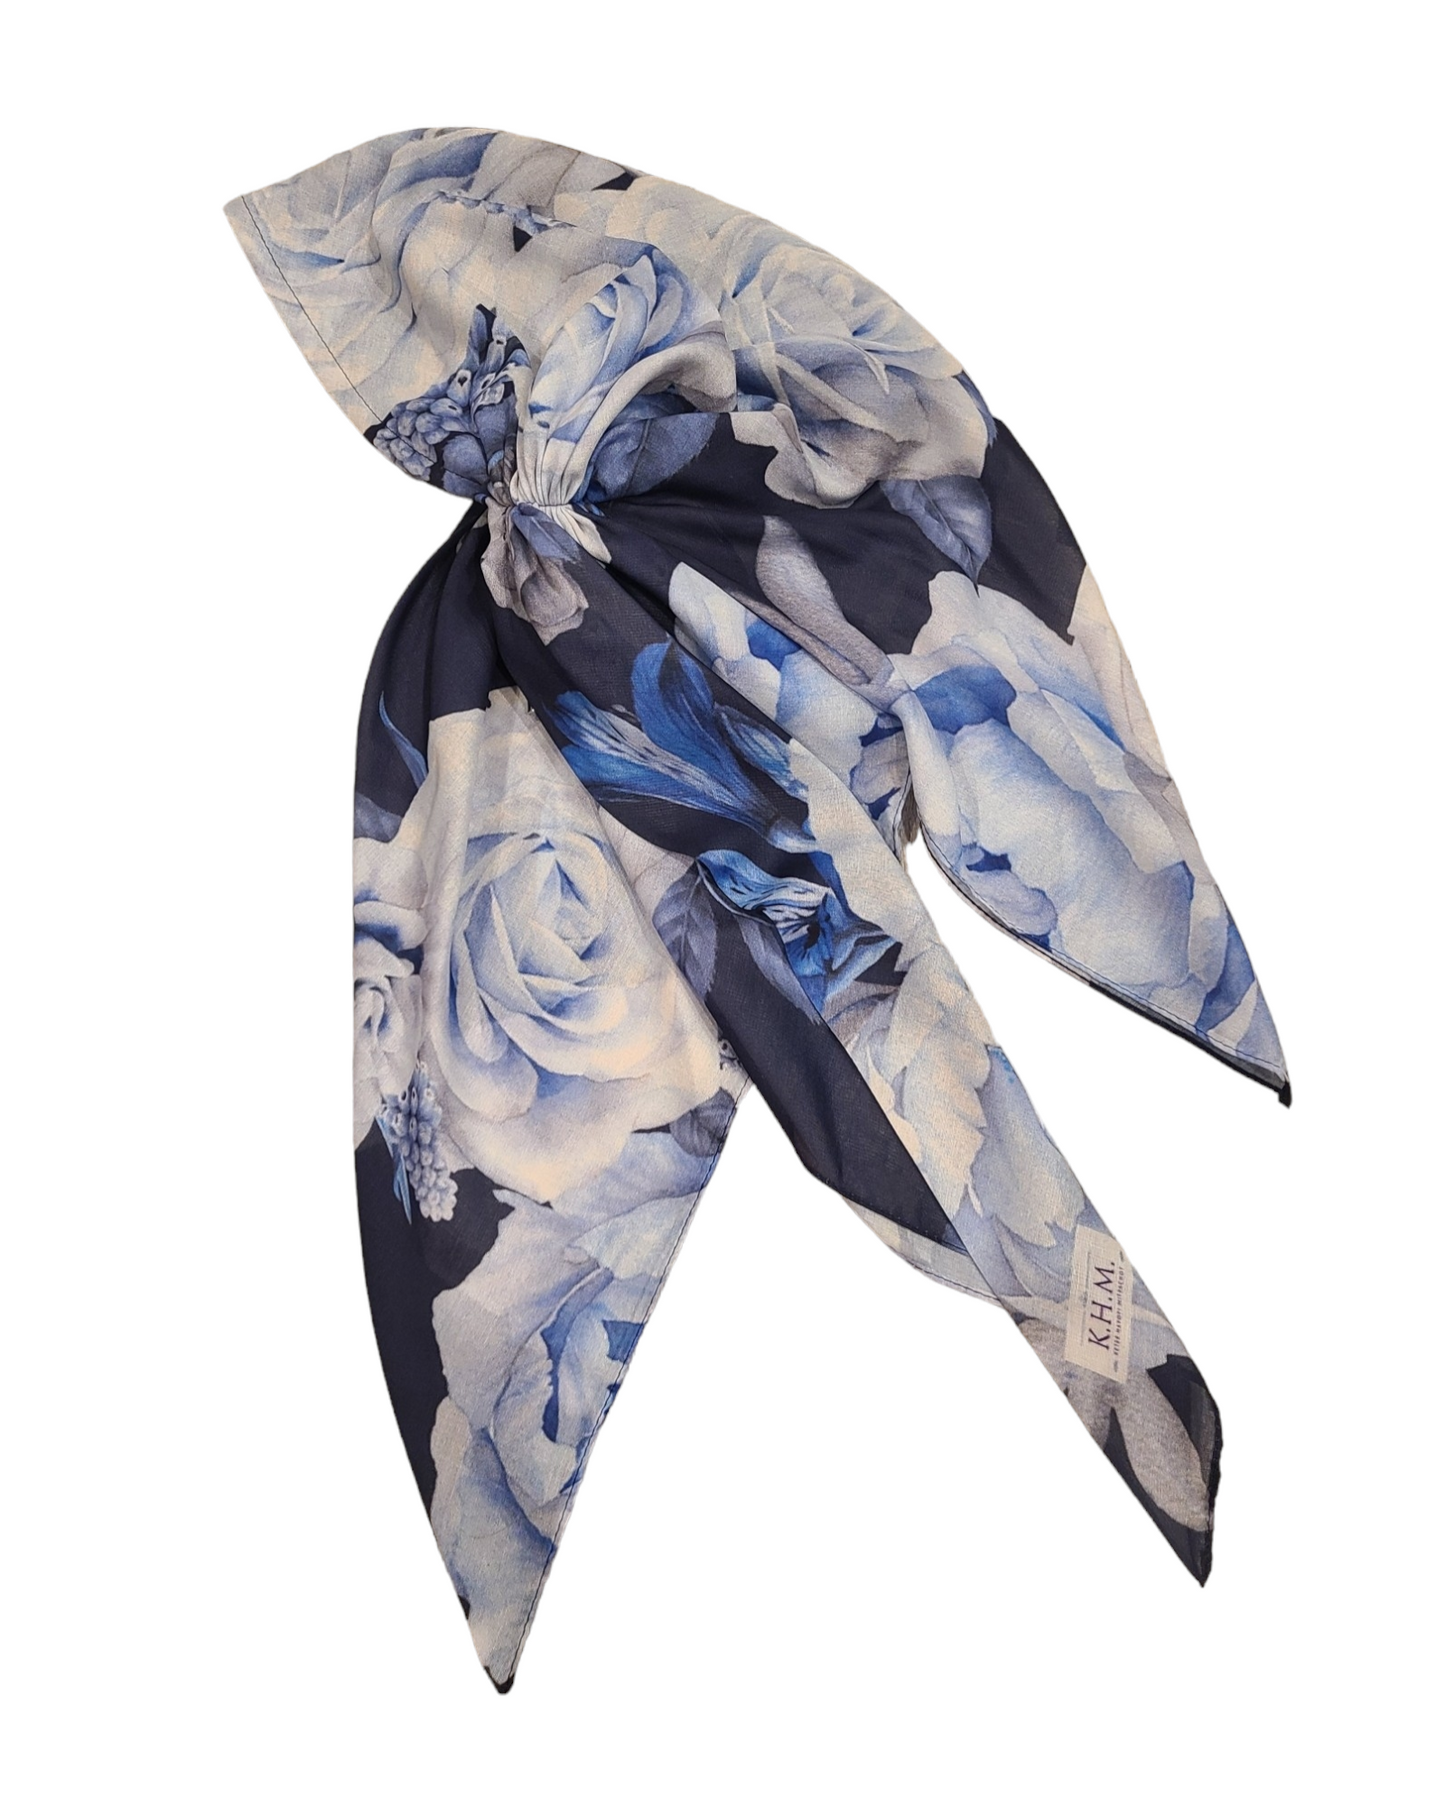 Blue Bells and White Roses Cotton Versatile Scarf - Keter Hayofi Mitpachot